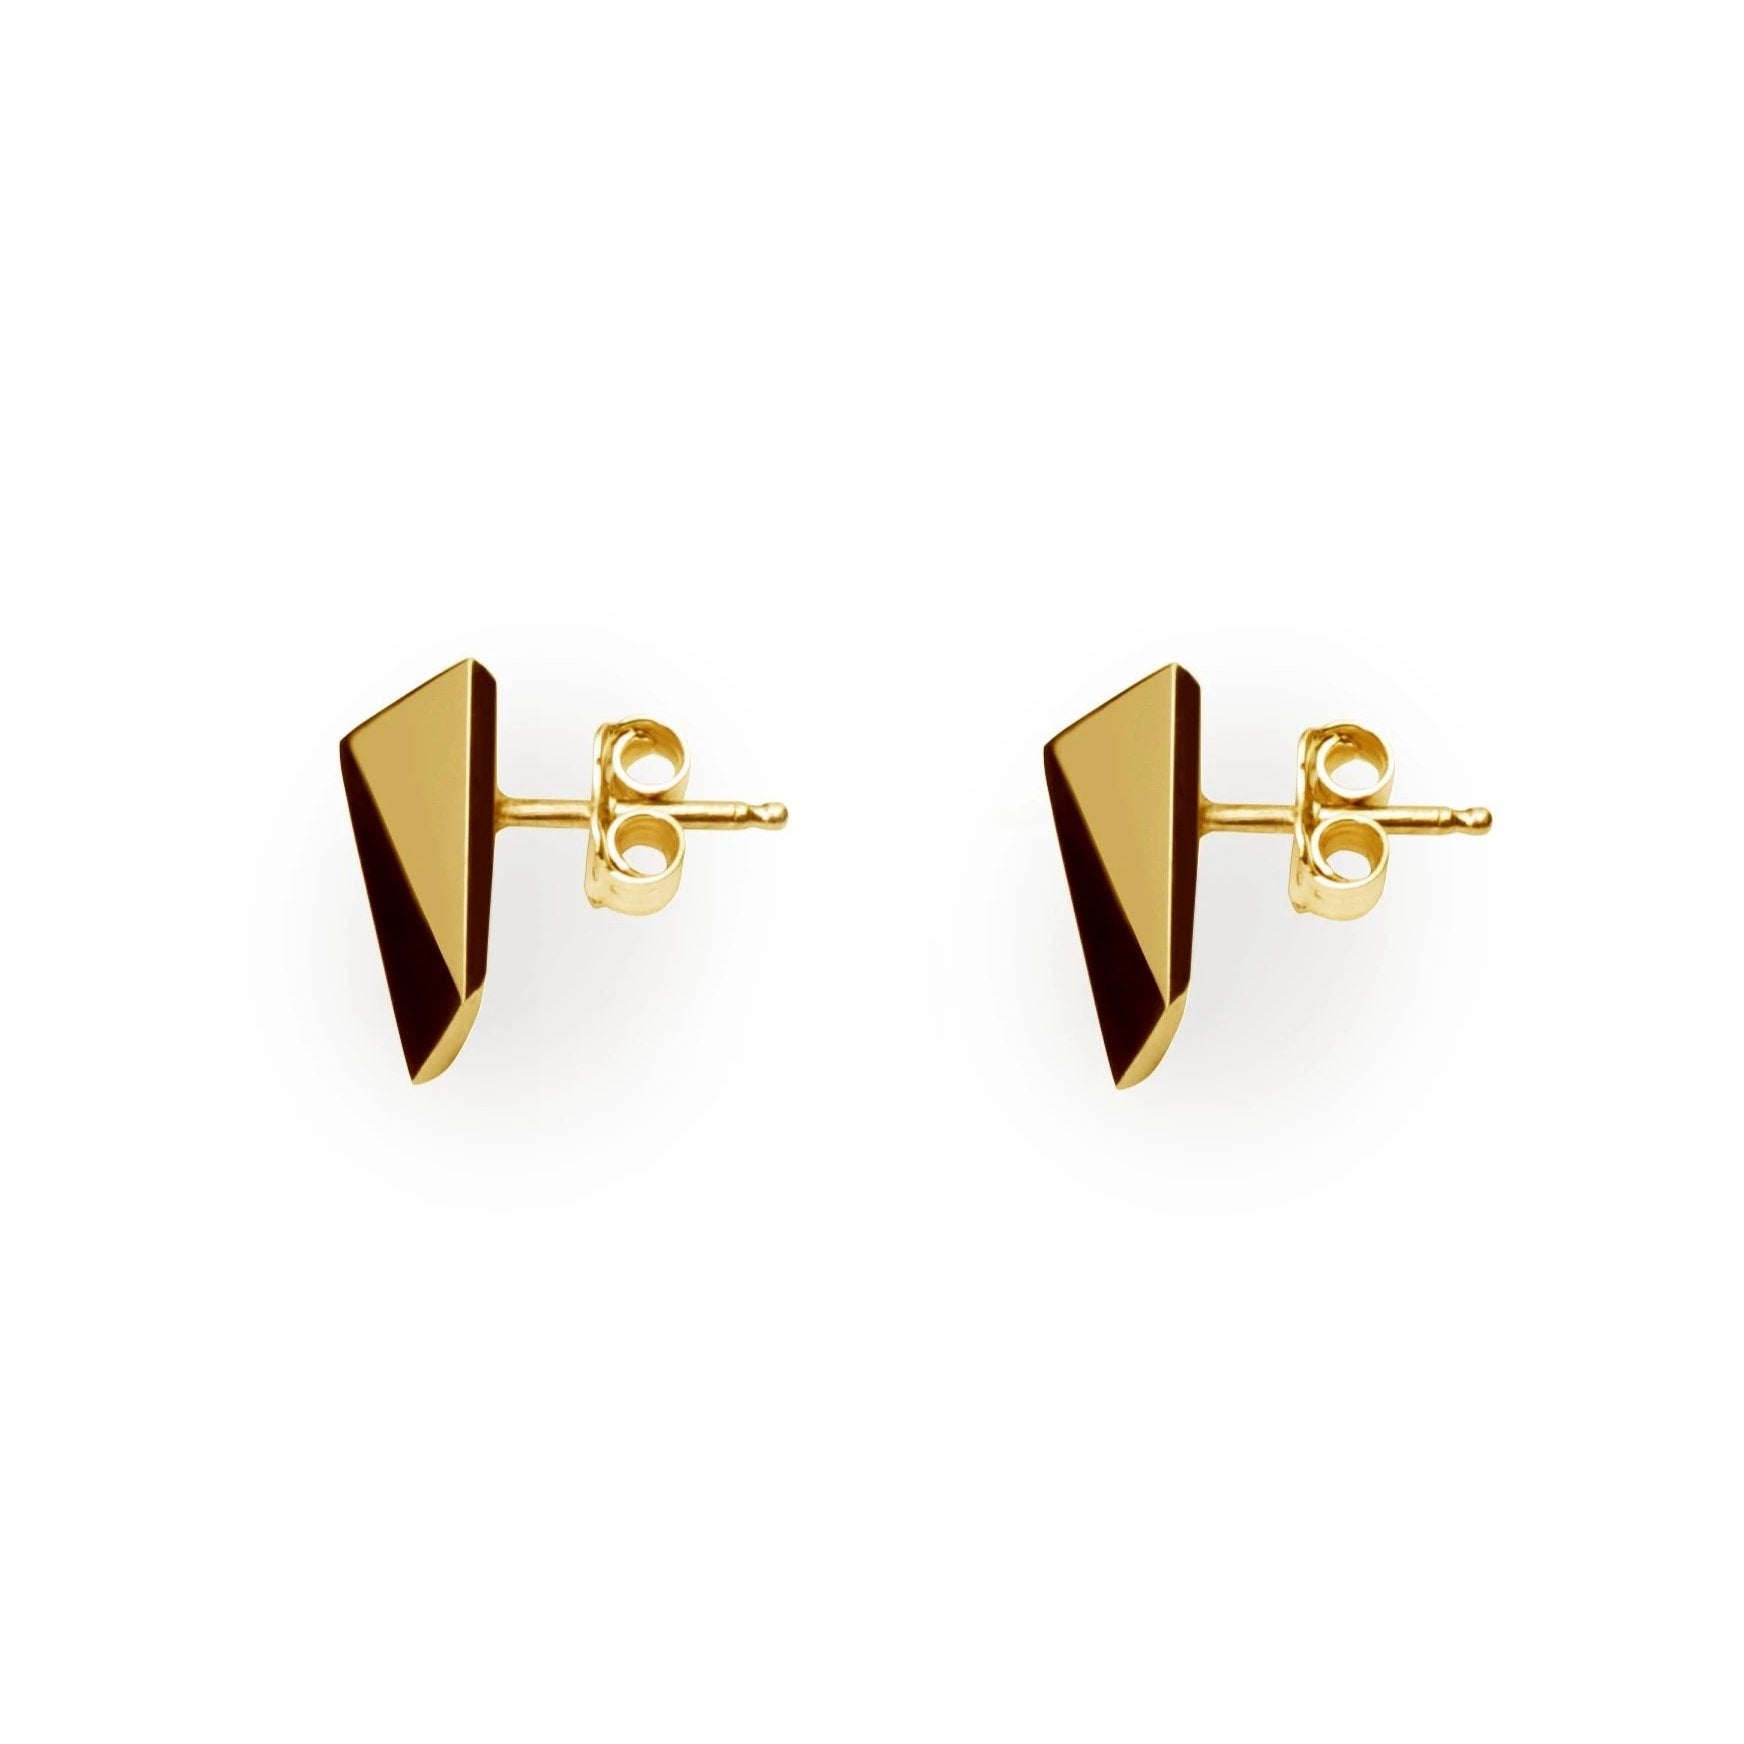 Stud earrings. Silver stud gold plated earrings. Elegant Small Stud